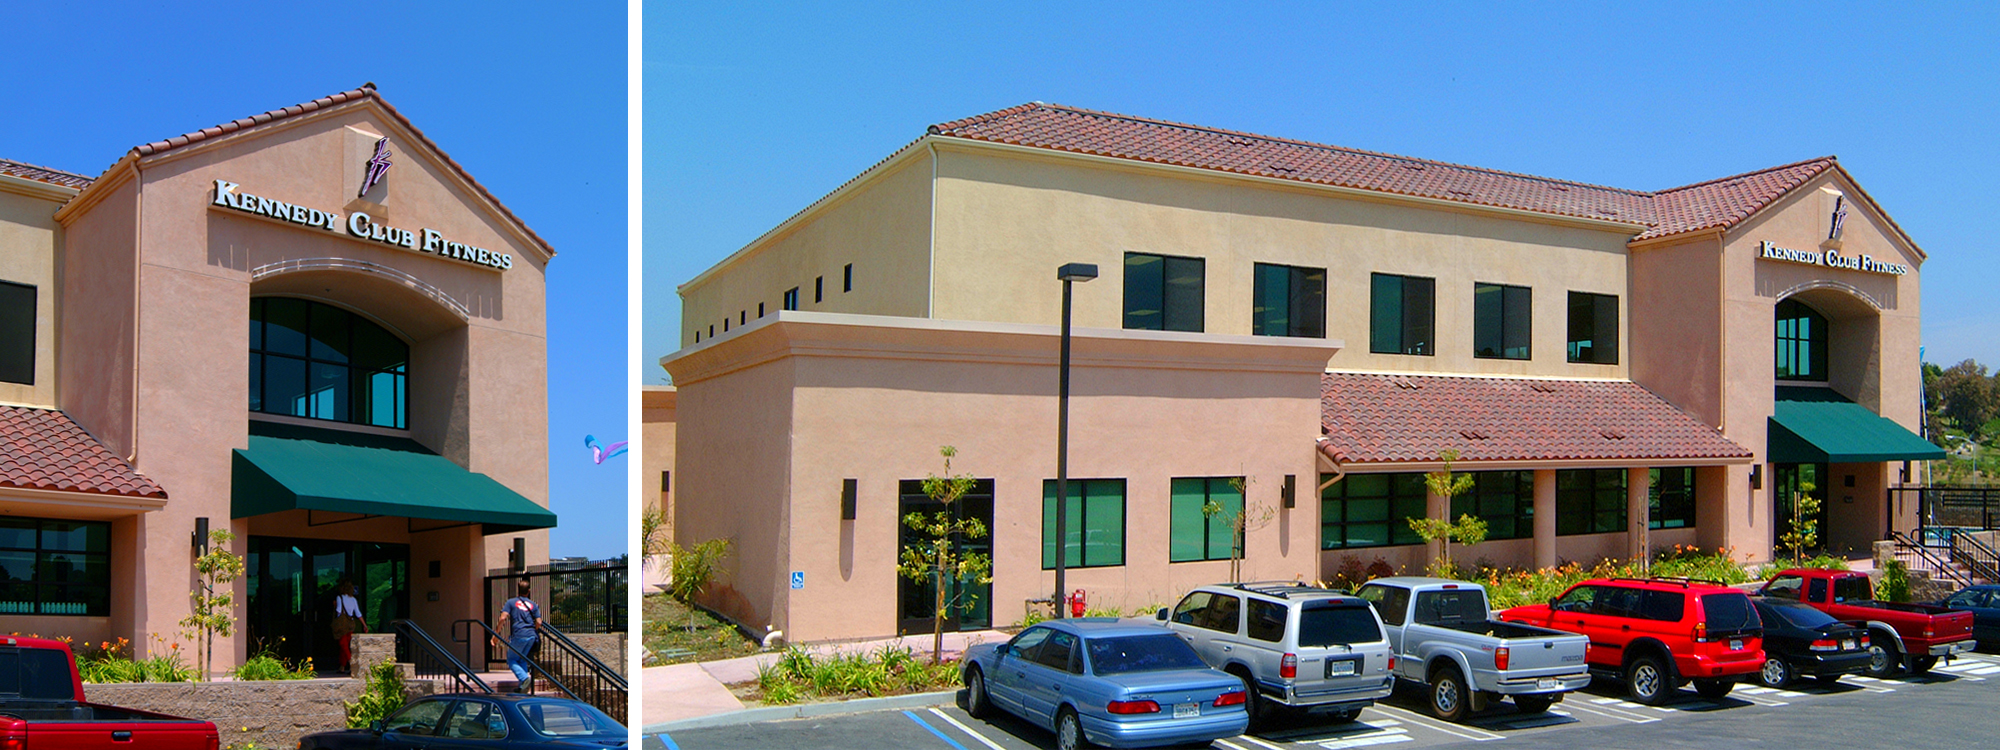 Fitness Center Arroyo Grande Building Contractor and Builder - Arroyo Grande, California - JW Design & Construction